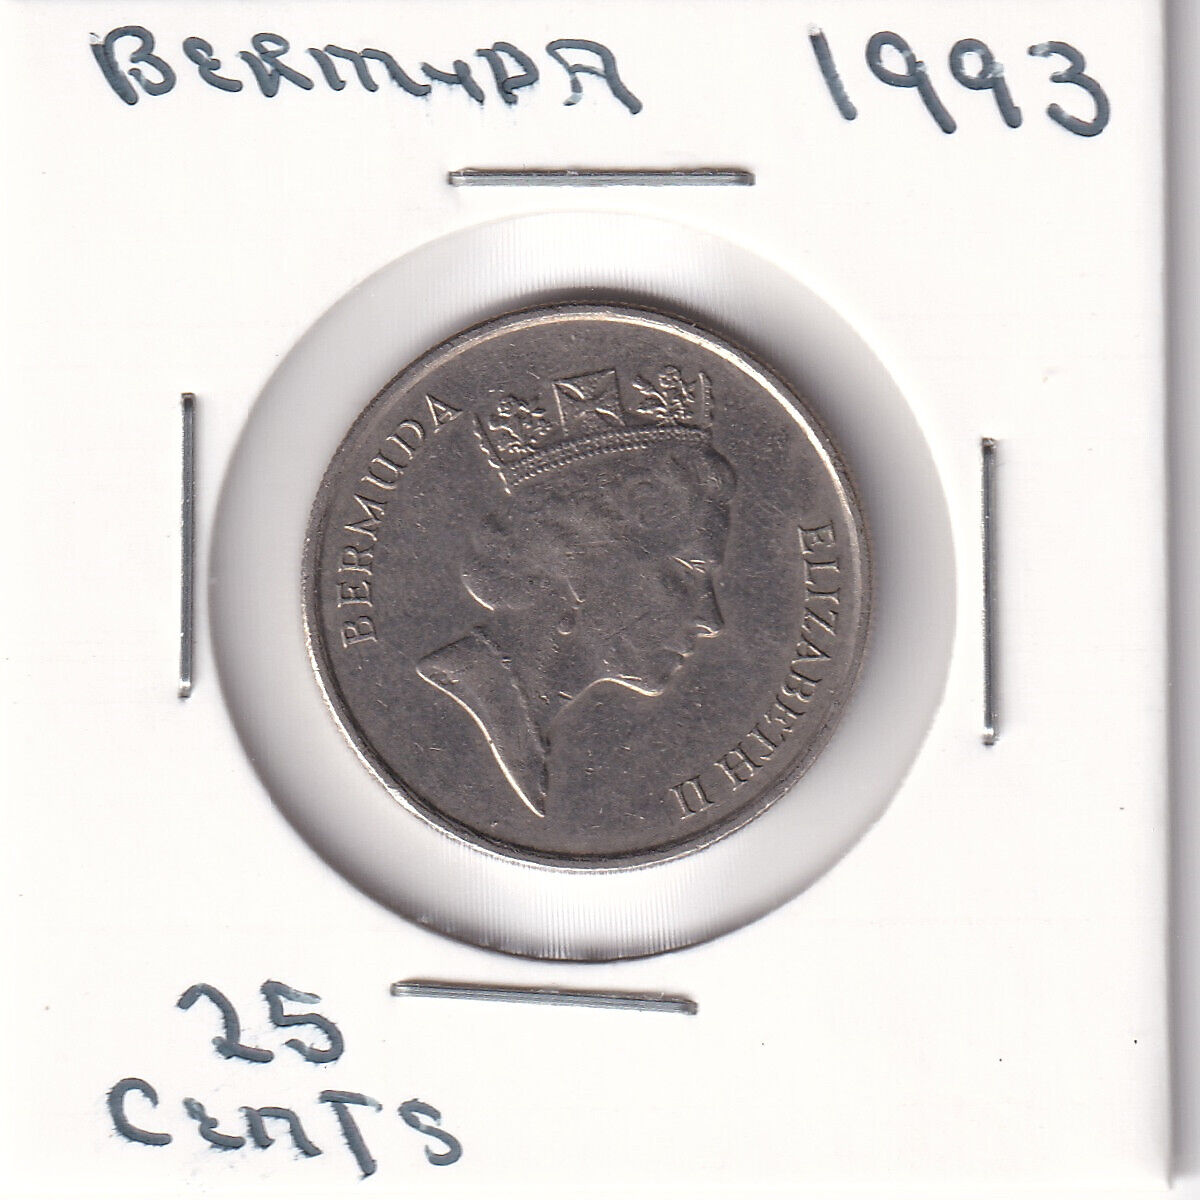 1993 - Bermuda 25 Cents - Good